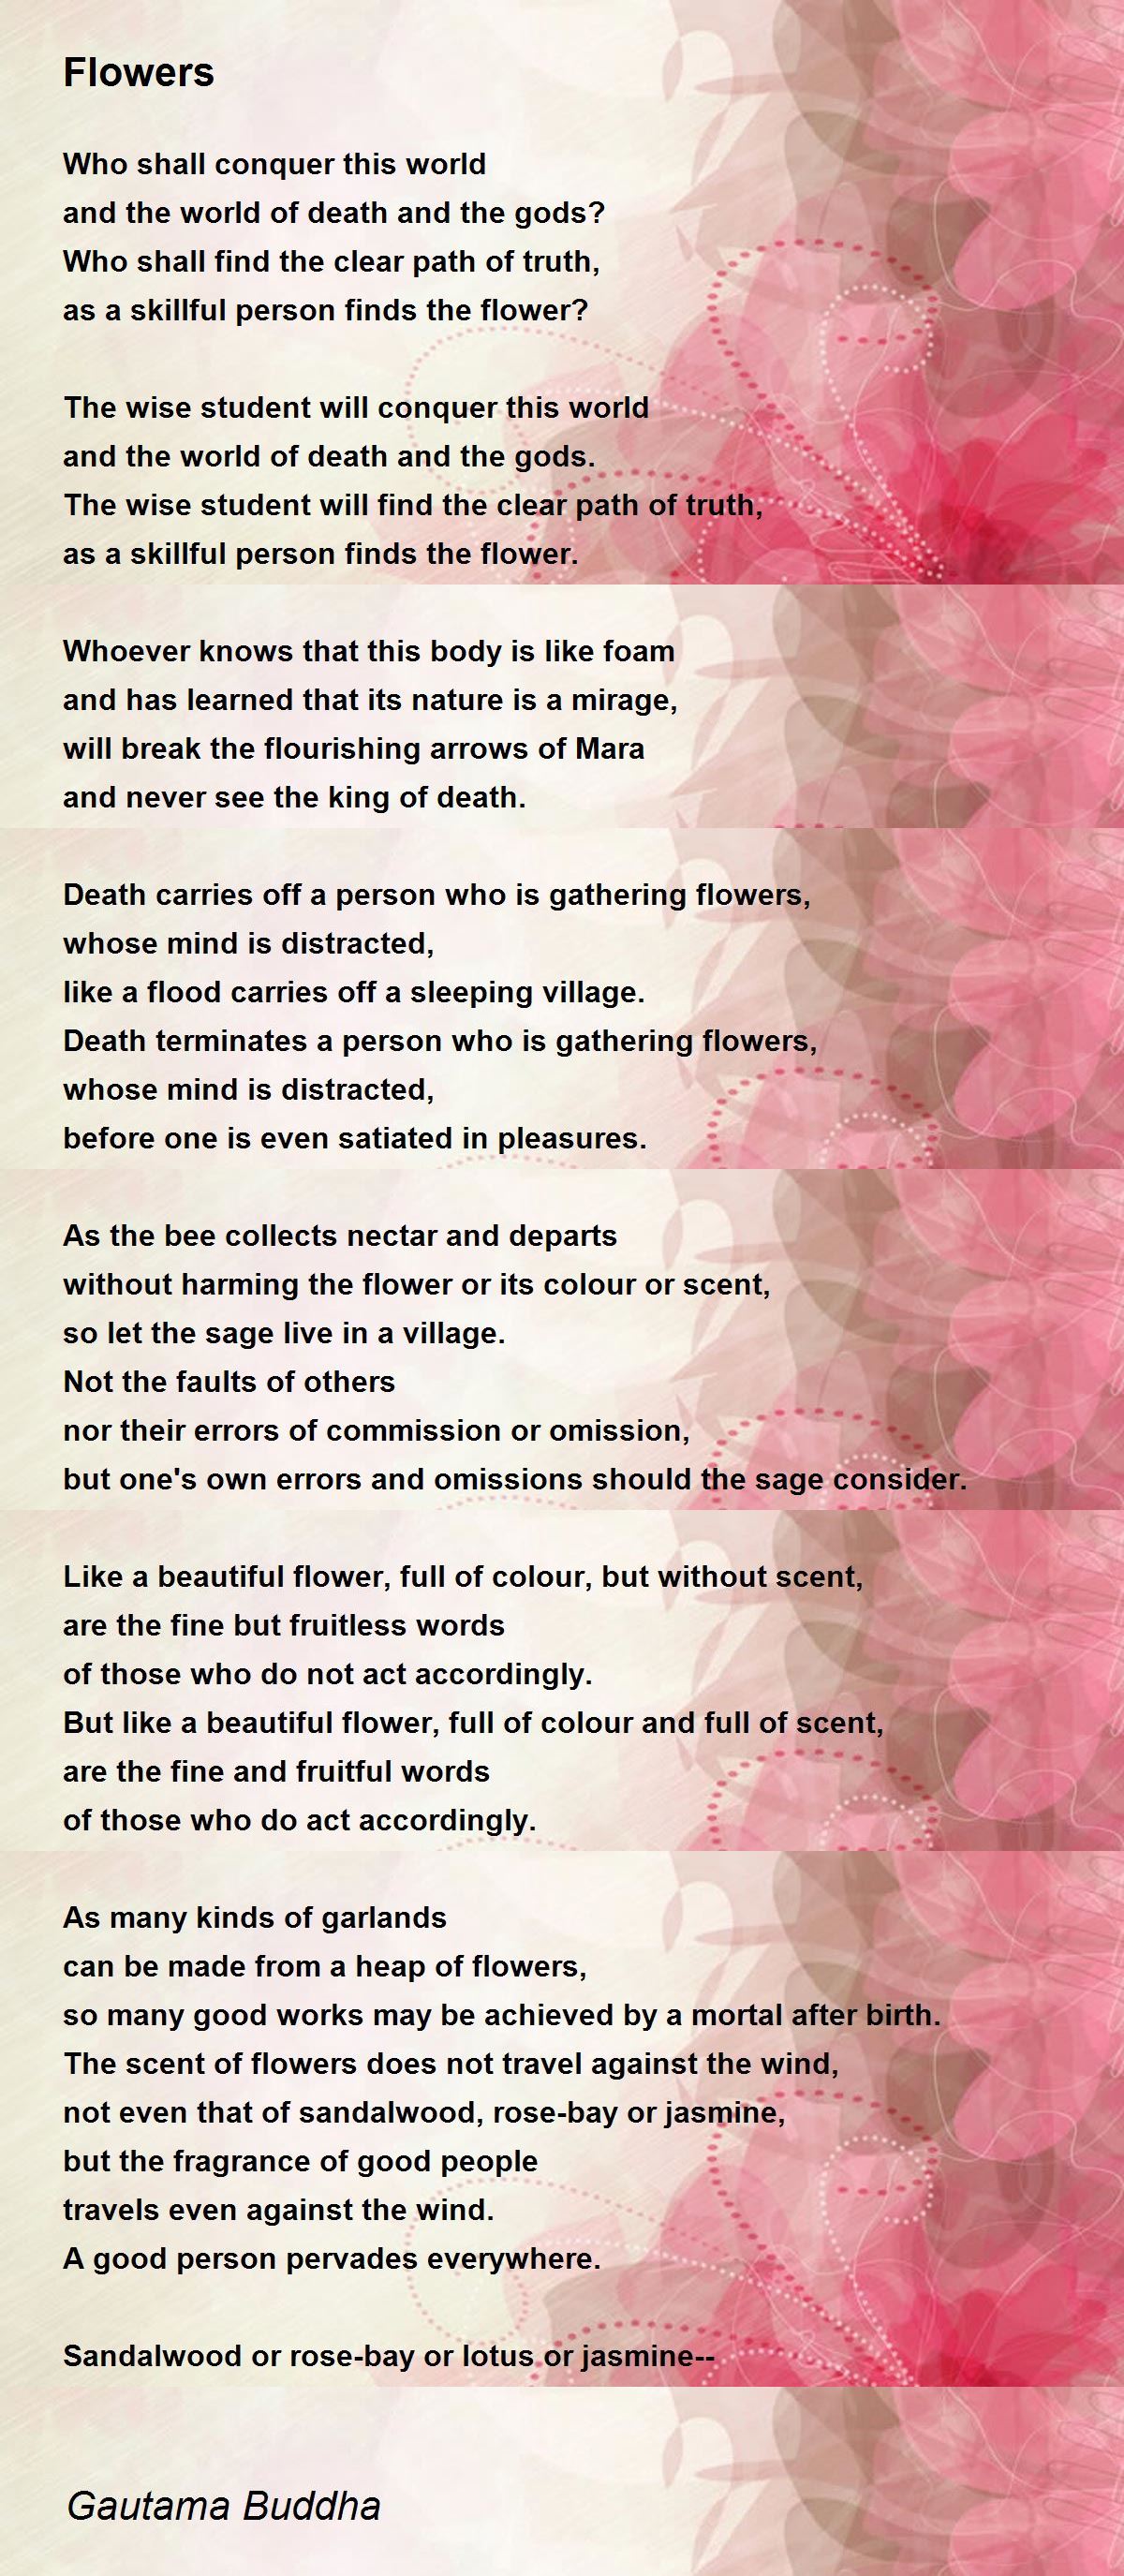 Flowers - Flowers Poem by Gautama Buddha